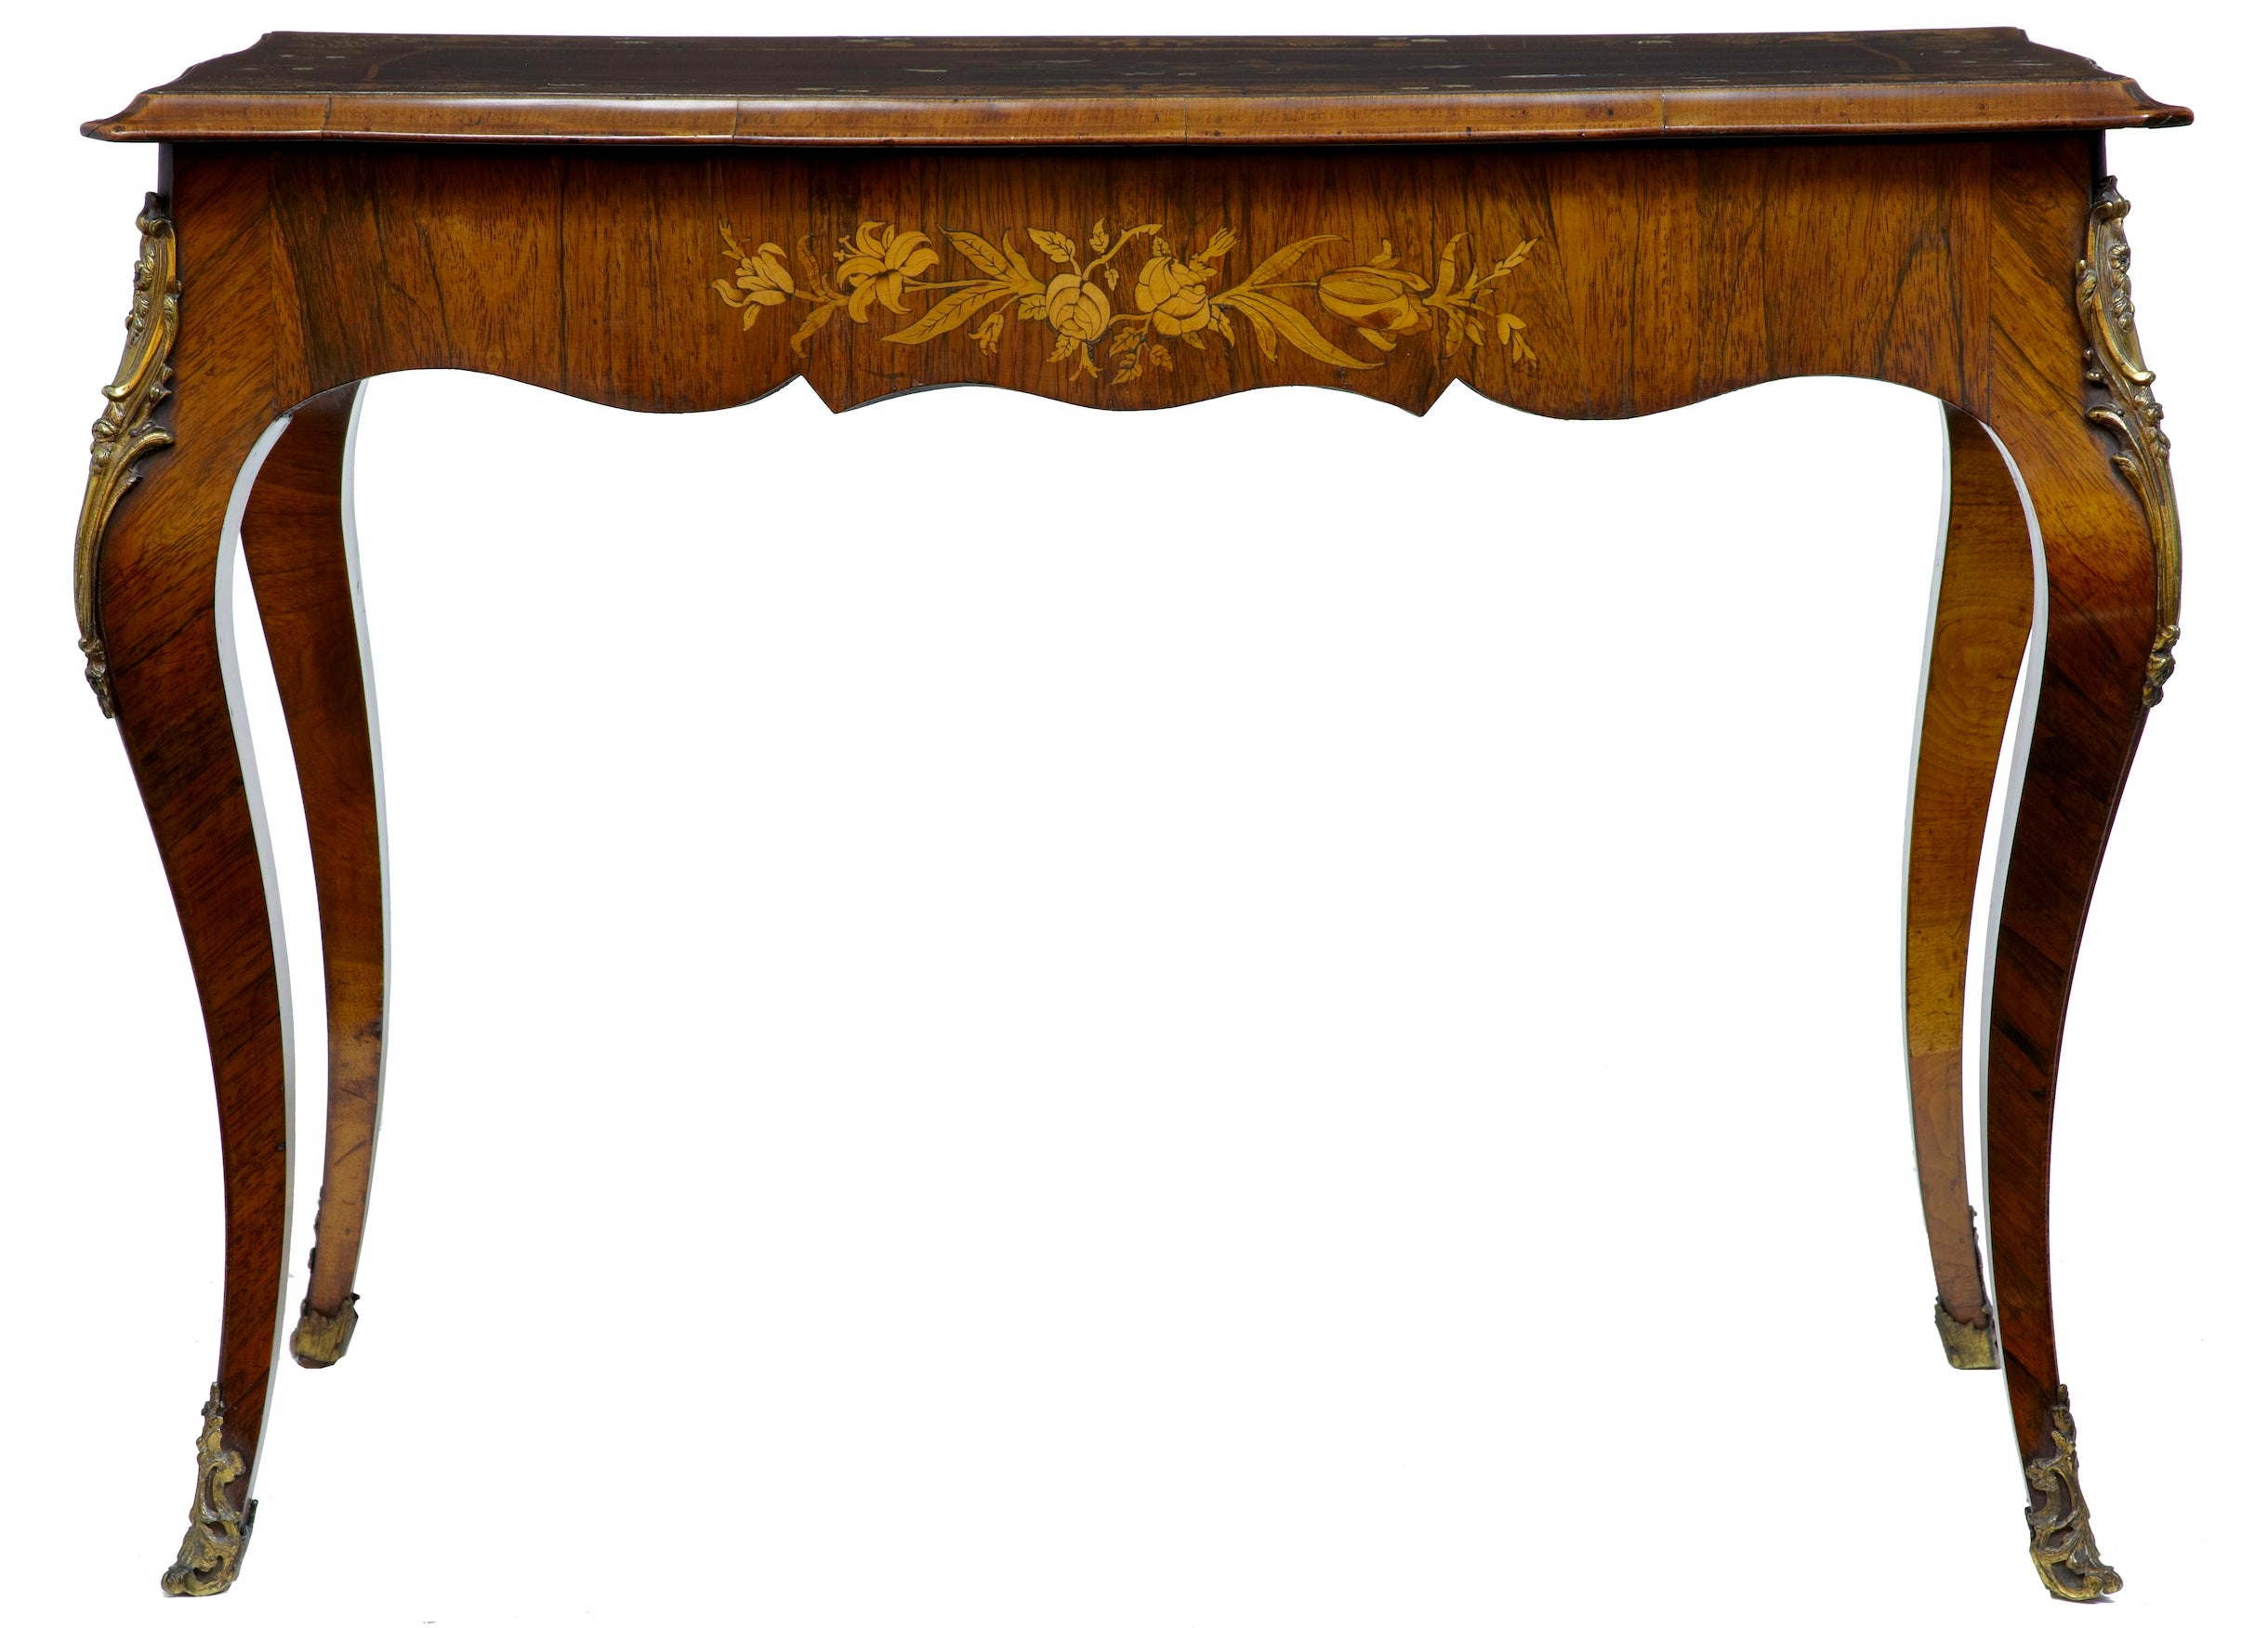 19th Century Antique Serpentine Inlaid Rosewood Center Table